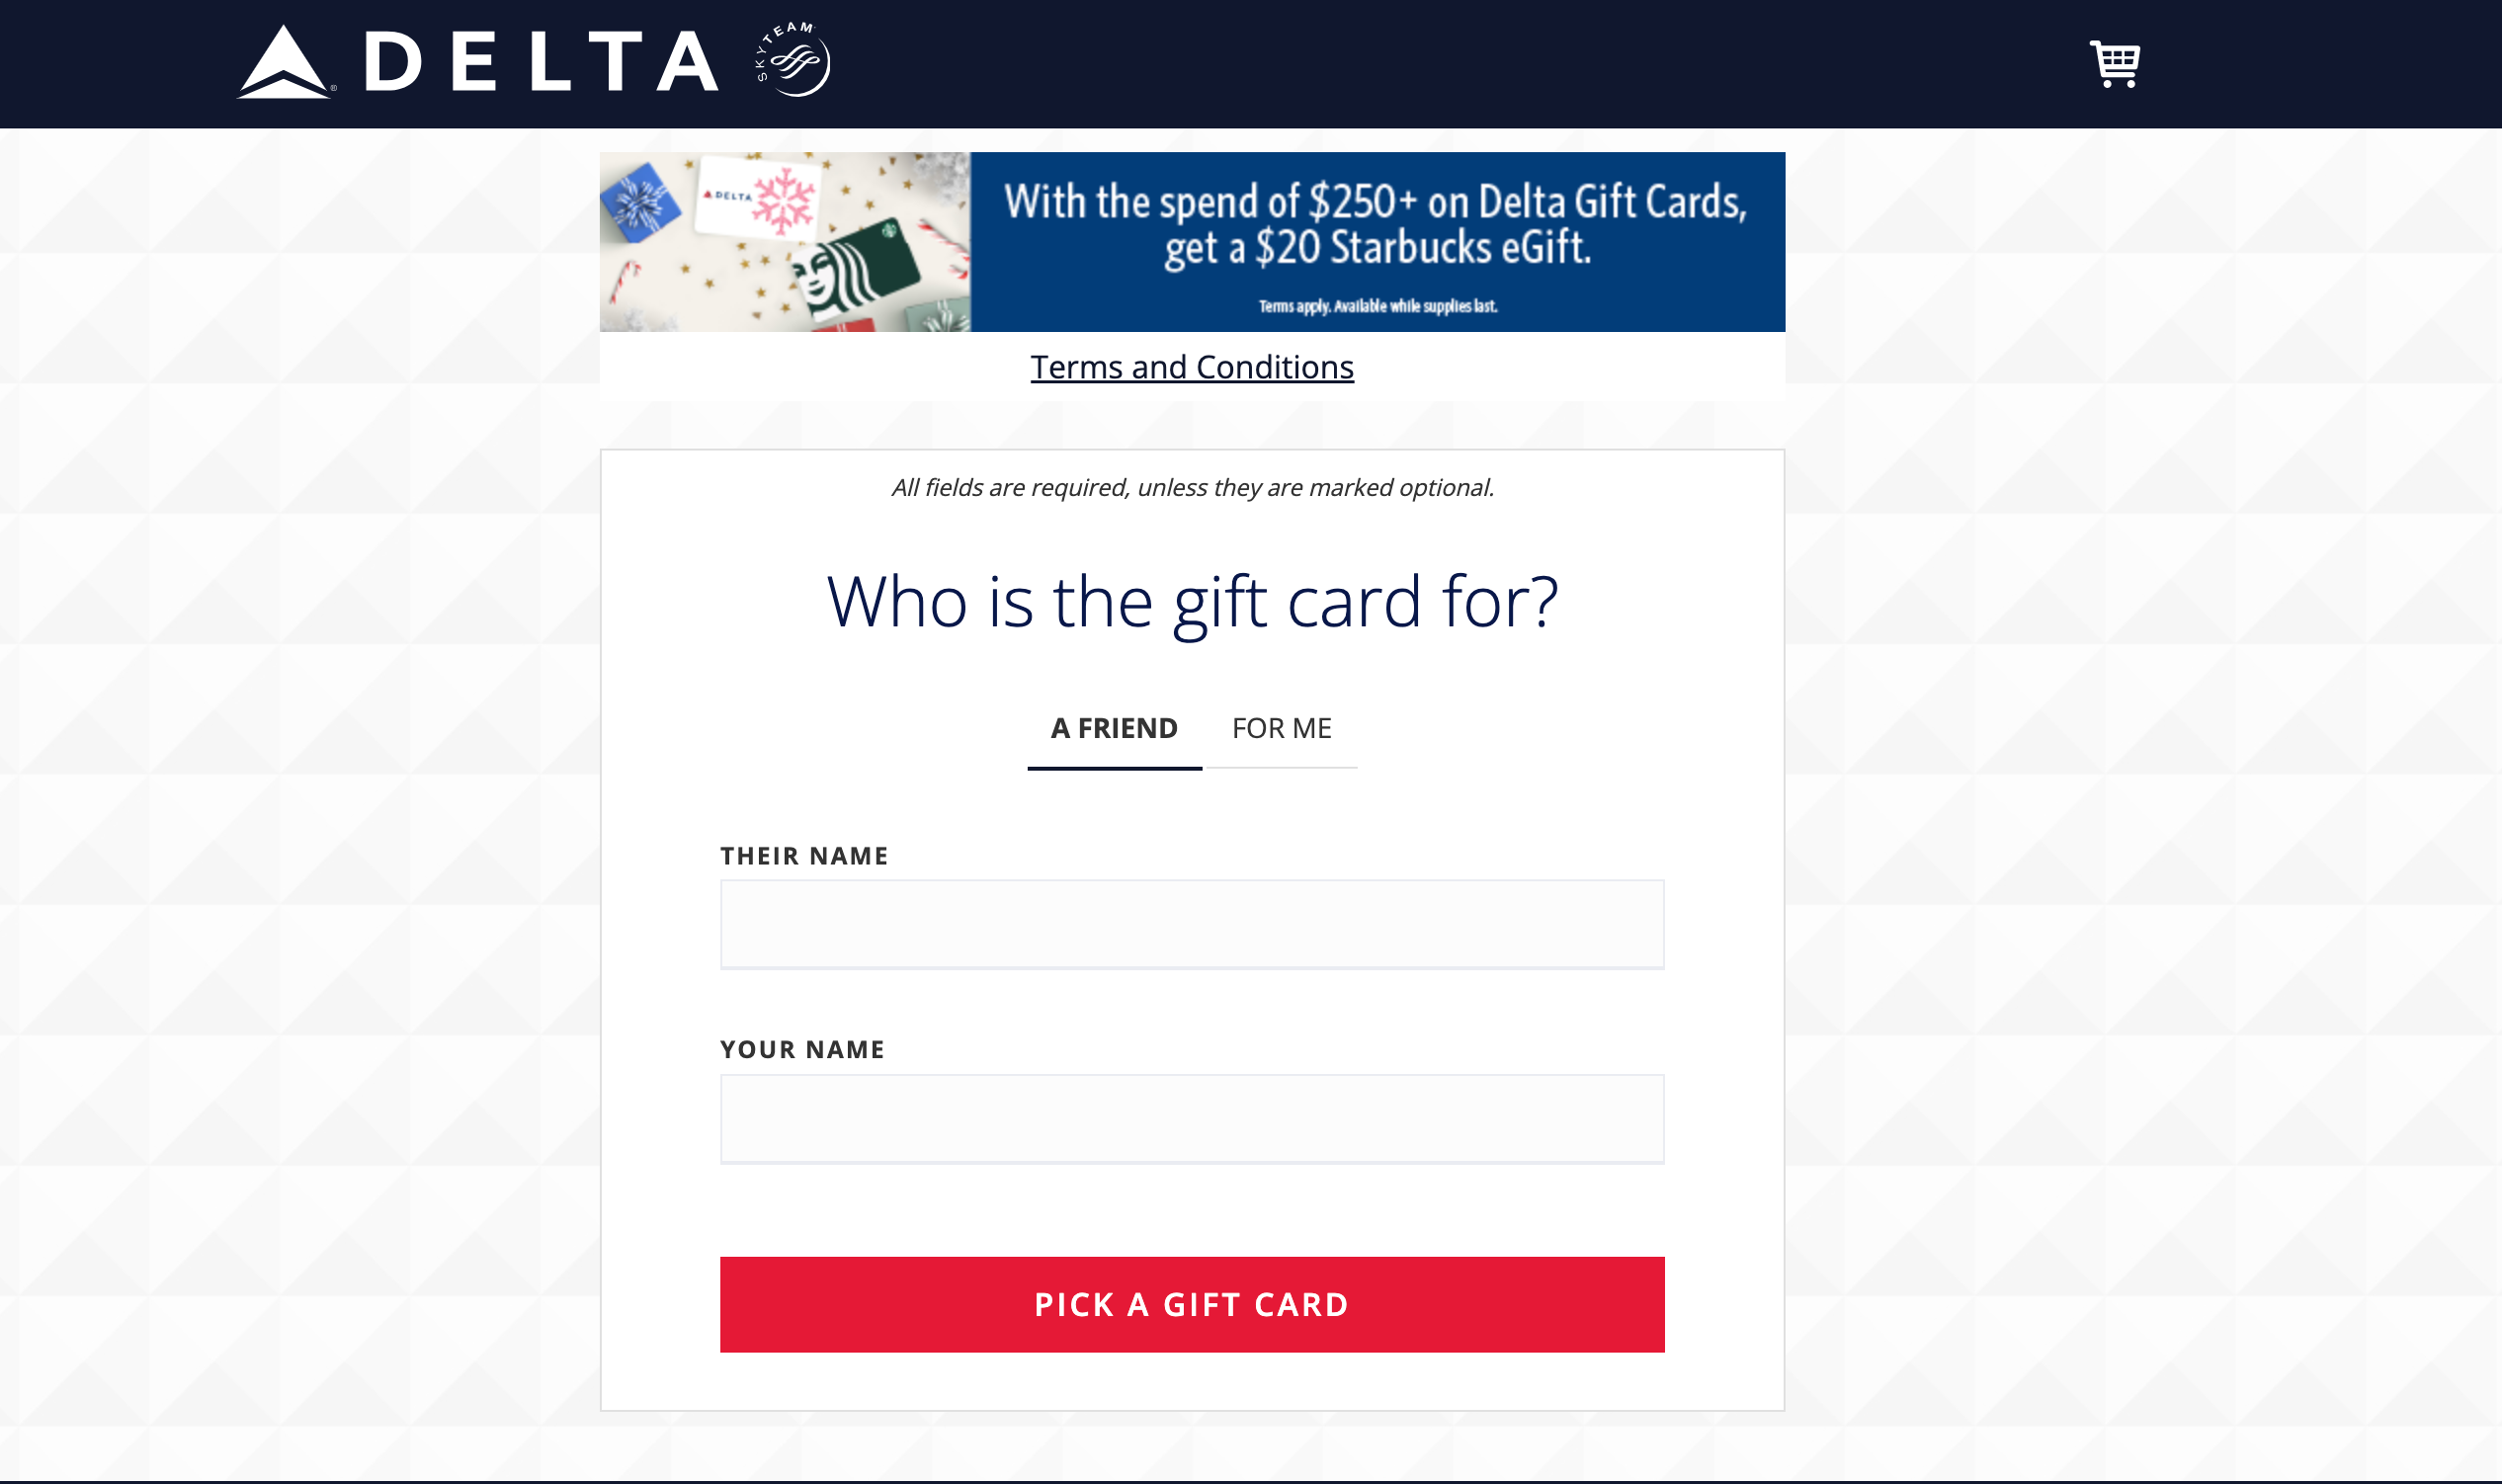 Delta gift card promo